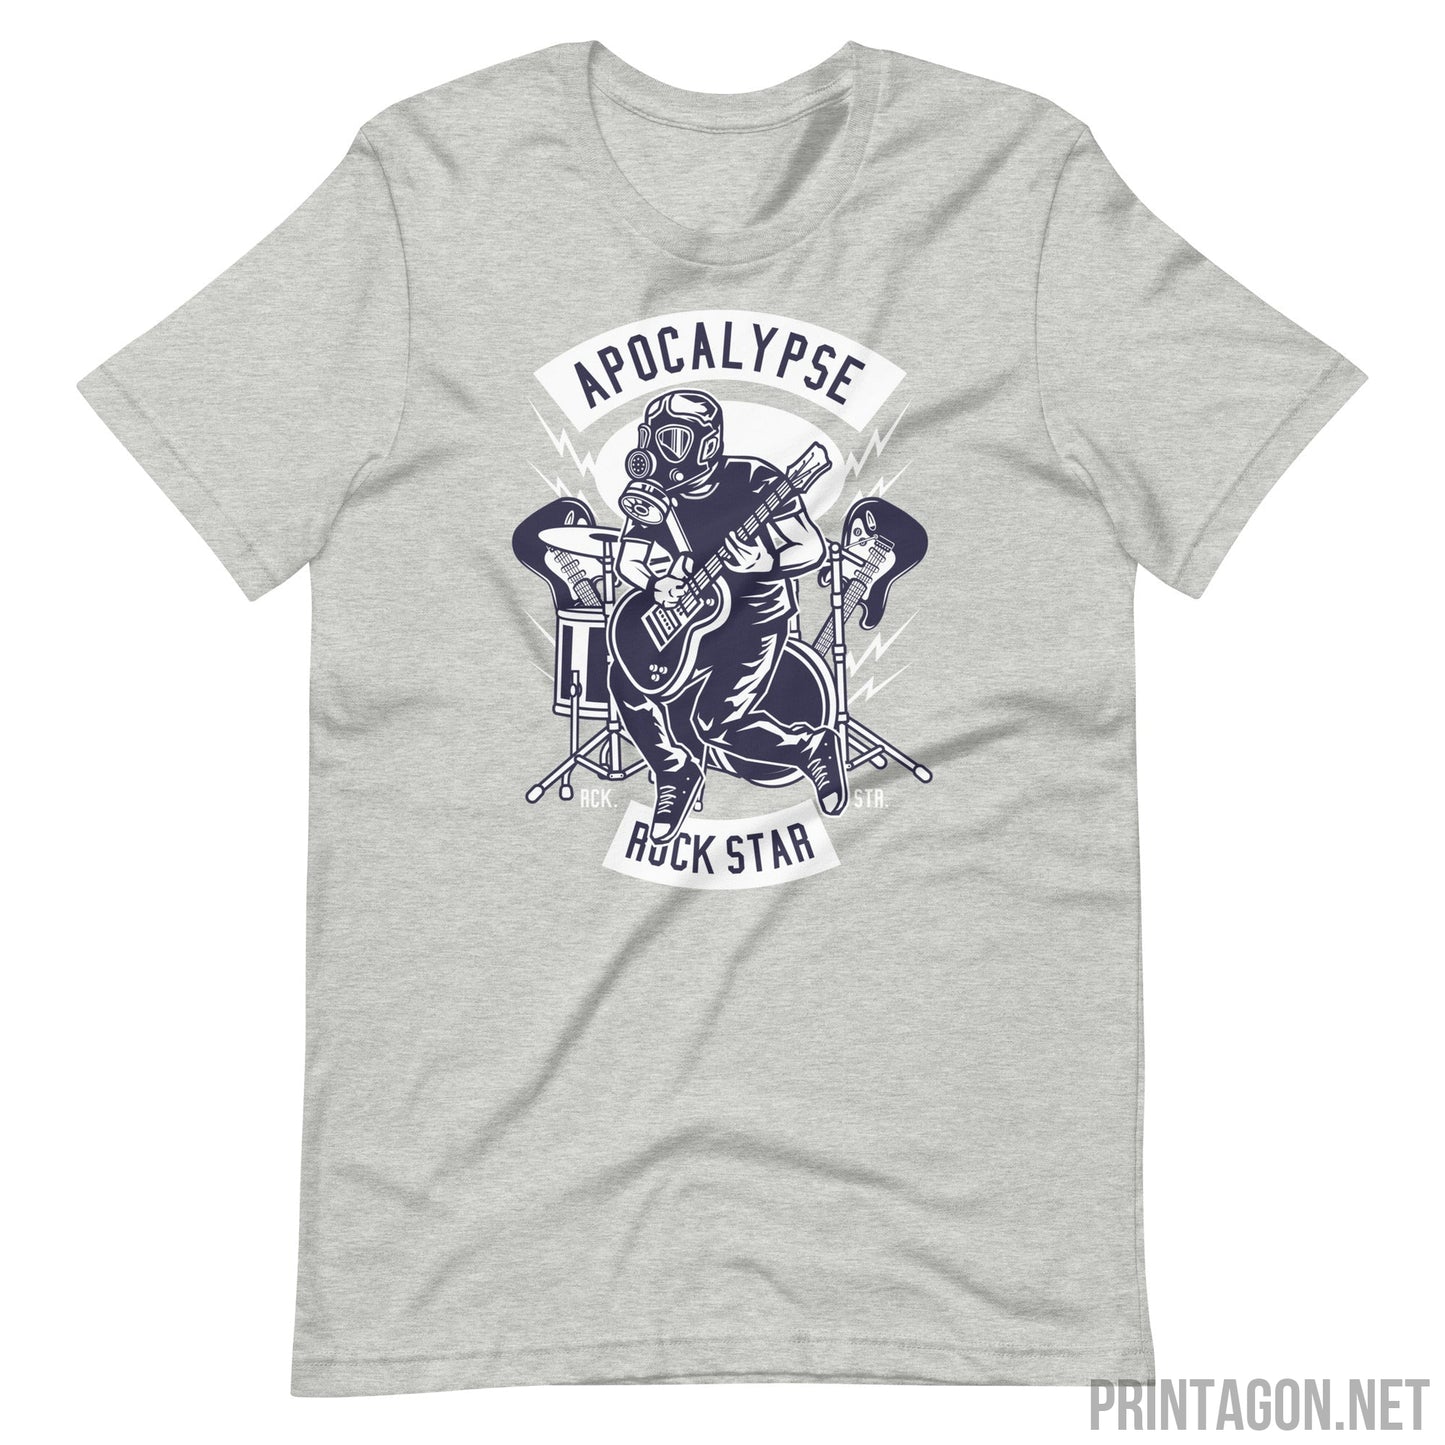 Printagon - Apocalypse Rock Star - T-shirt - Athletic Heather / XS